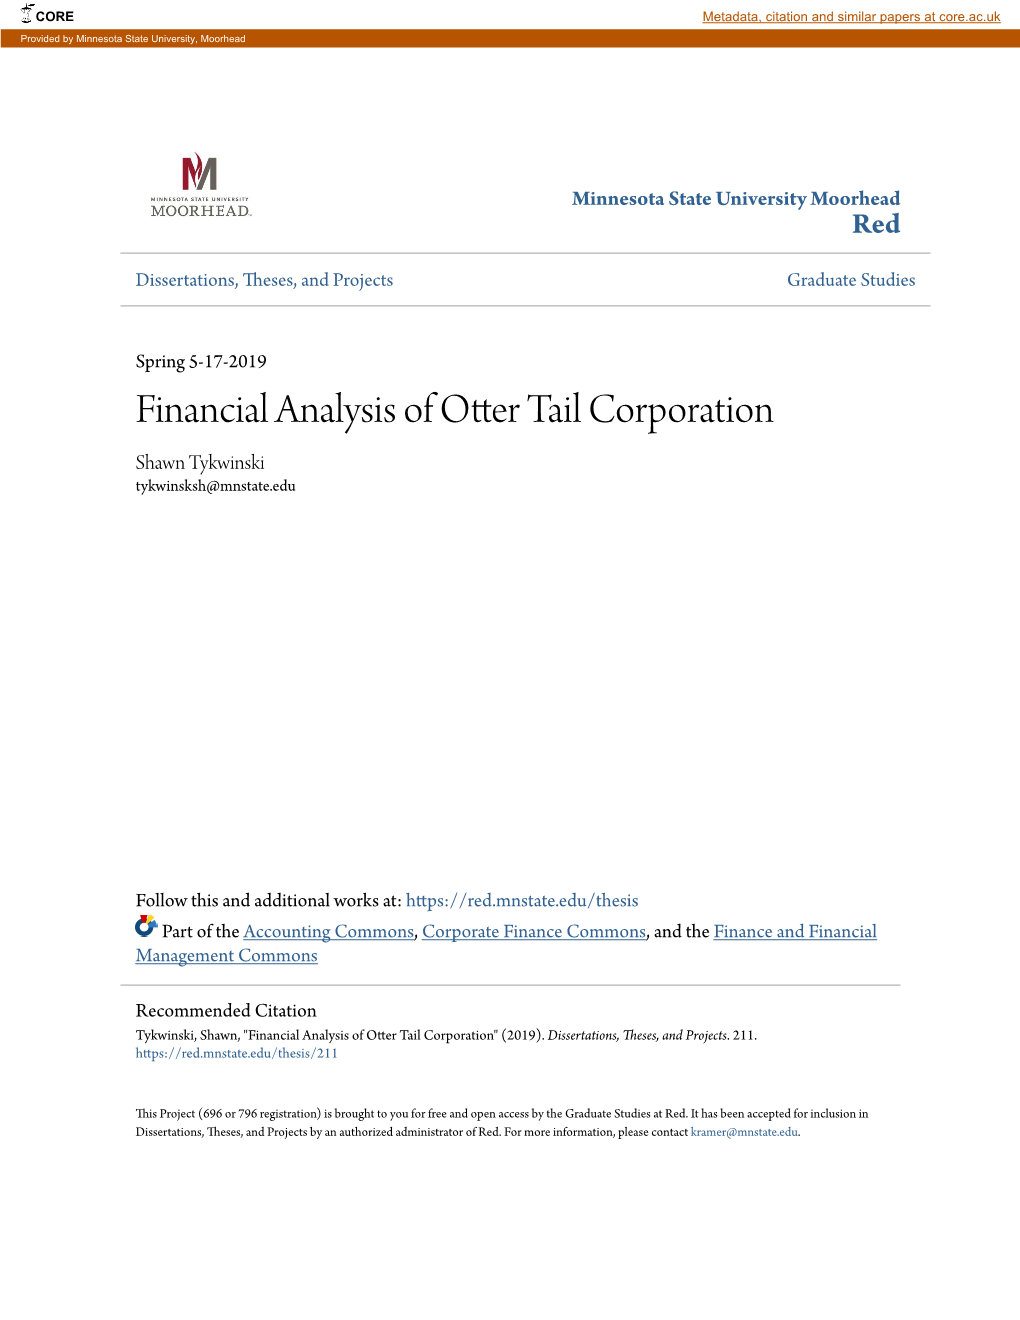 Financial Analysis of Otter Tail Corporation Shawn Tykwinski Tykwinsksh@Mnstate.Edu